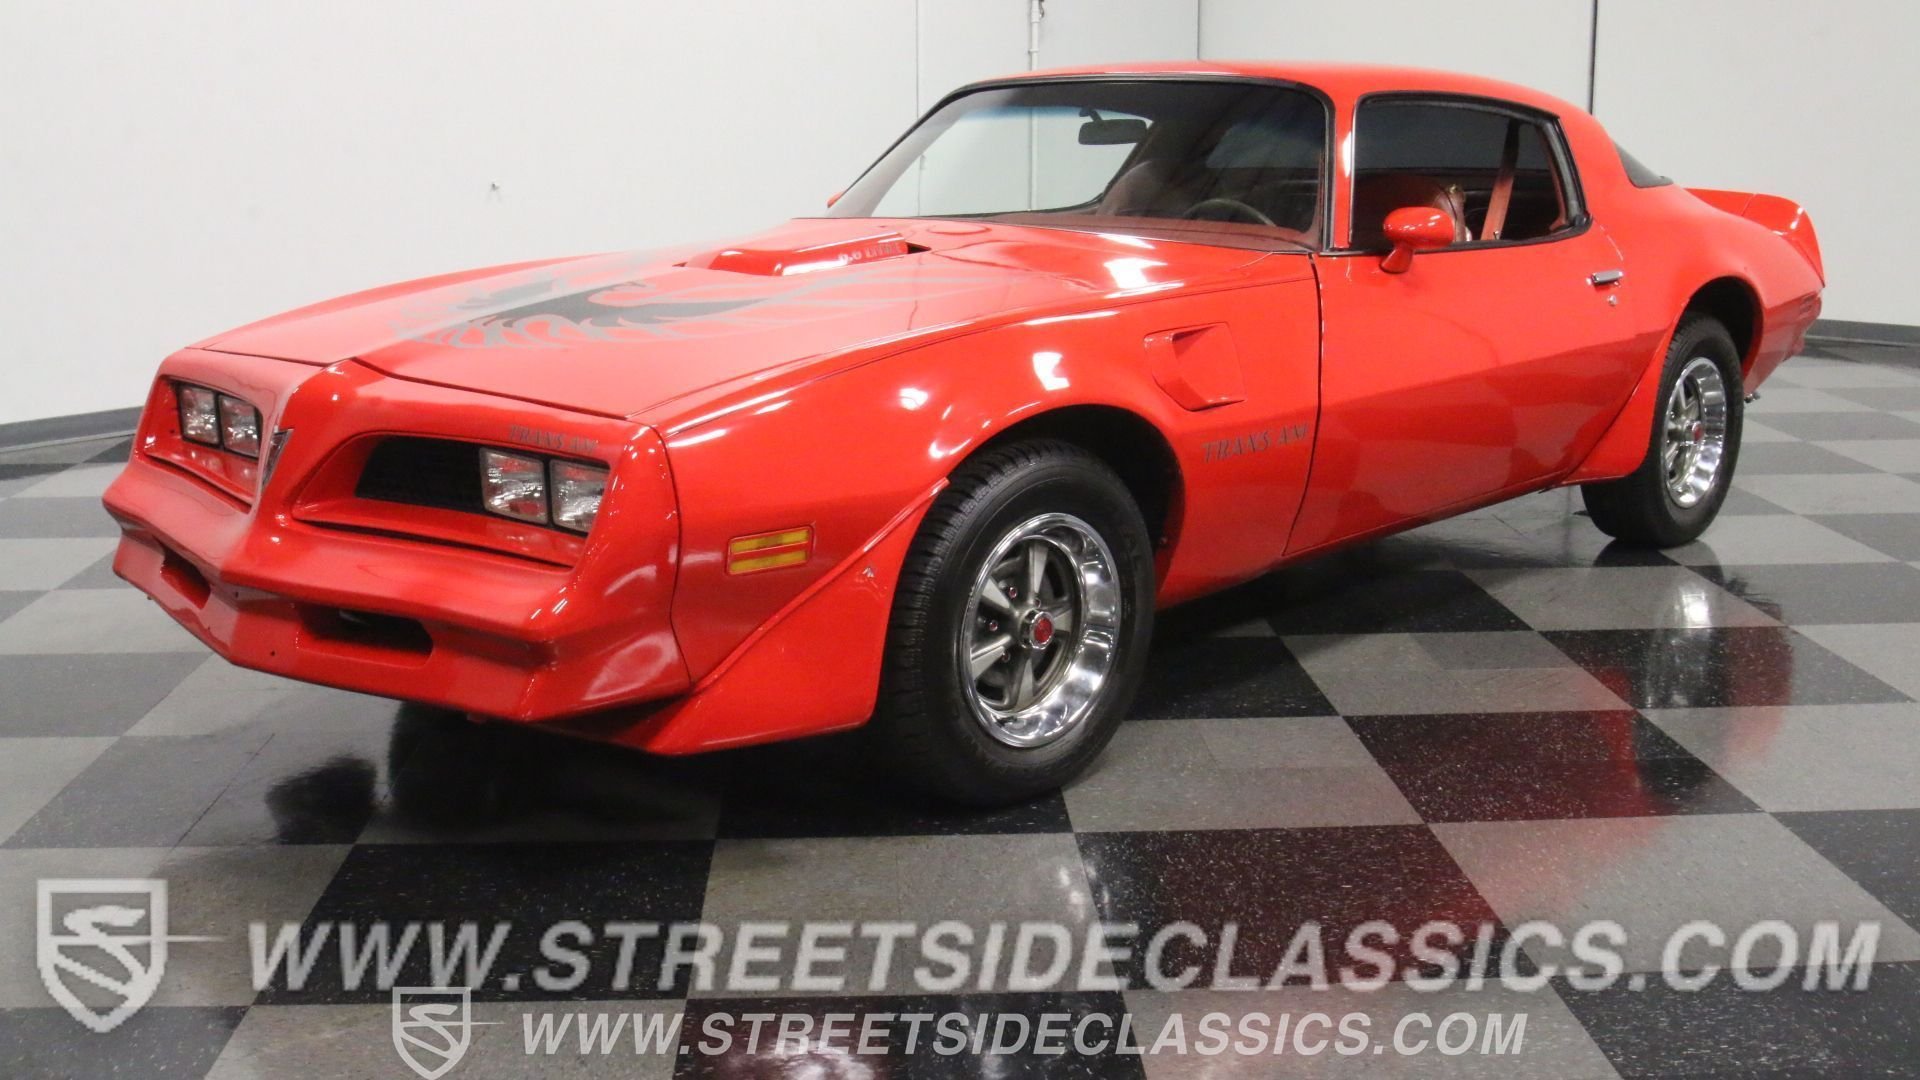 1977 Pontiac Firebird | Classic Cars for Sale - Streetside Classics